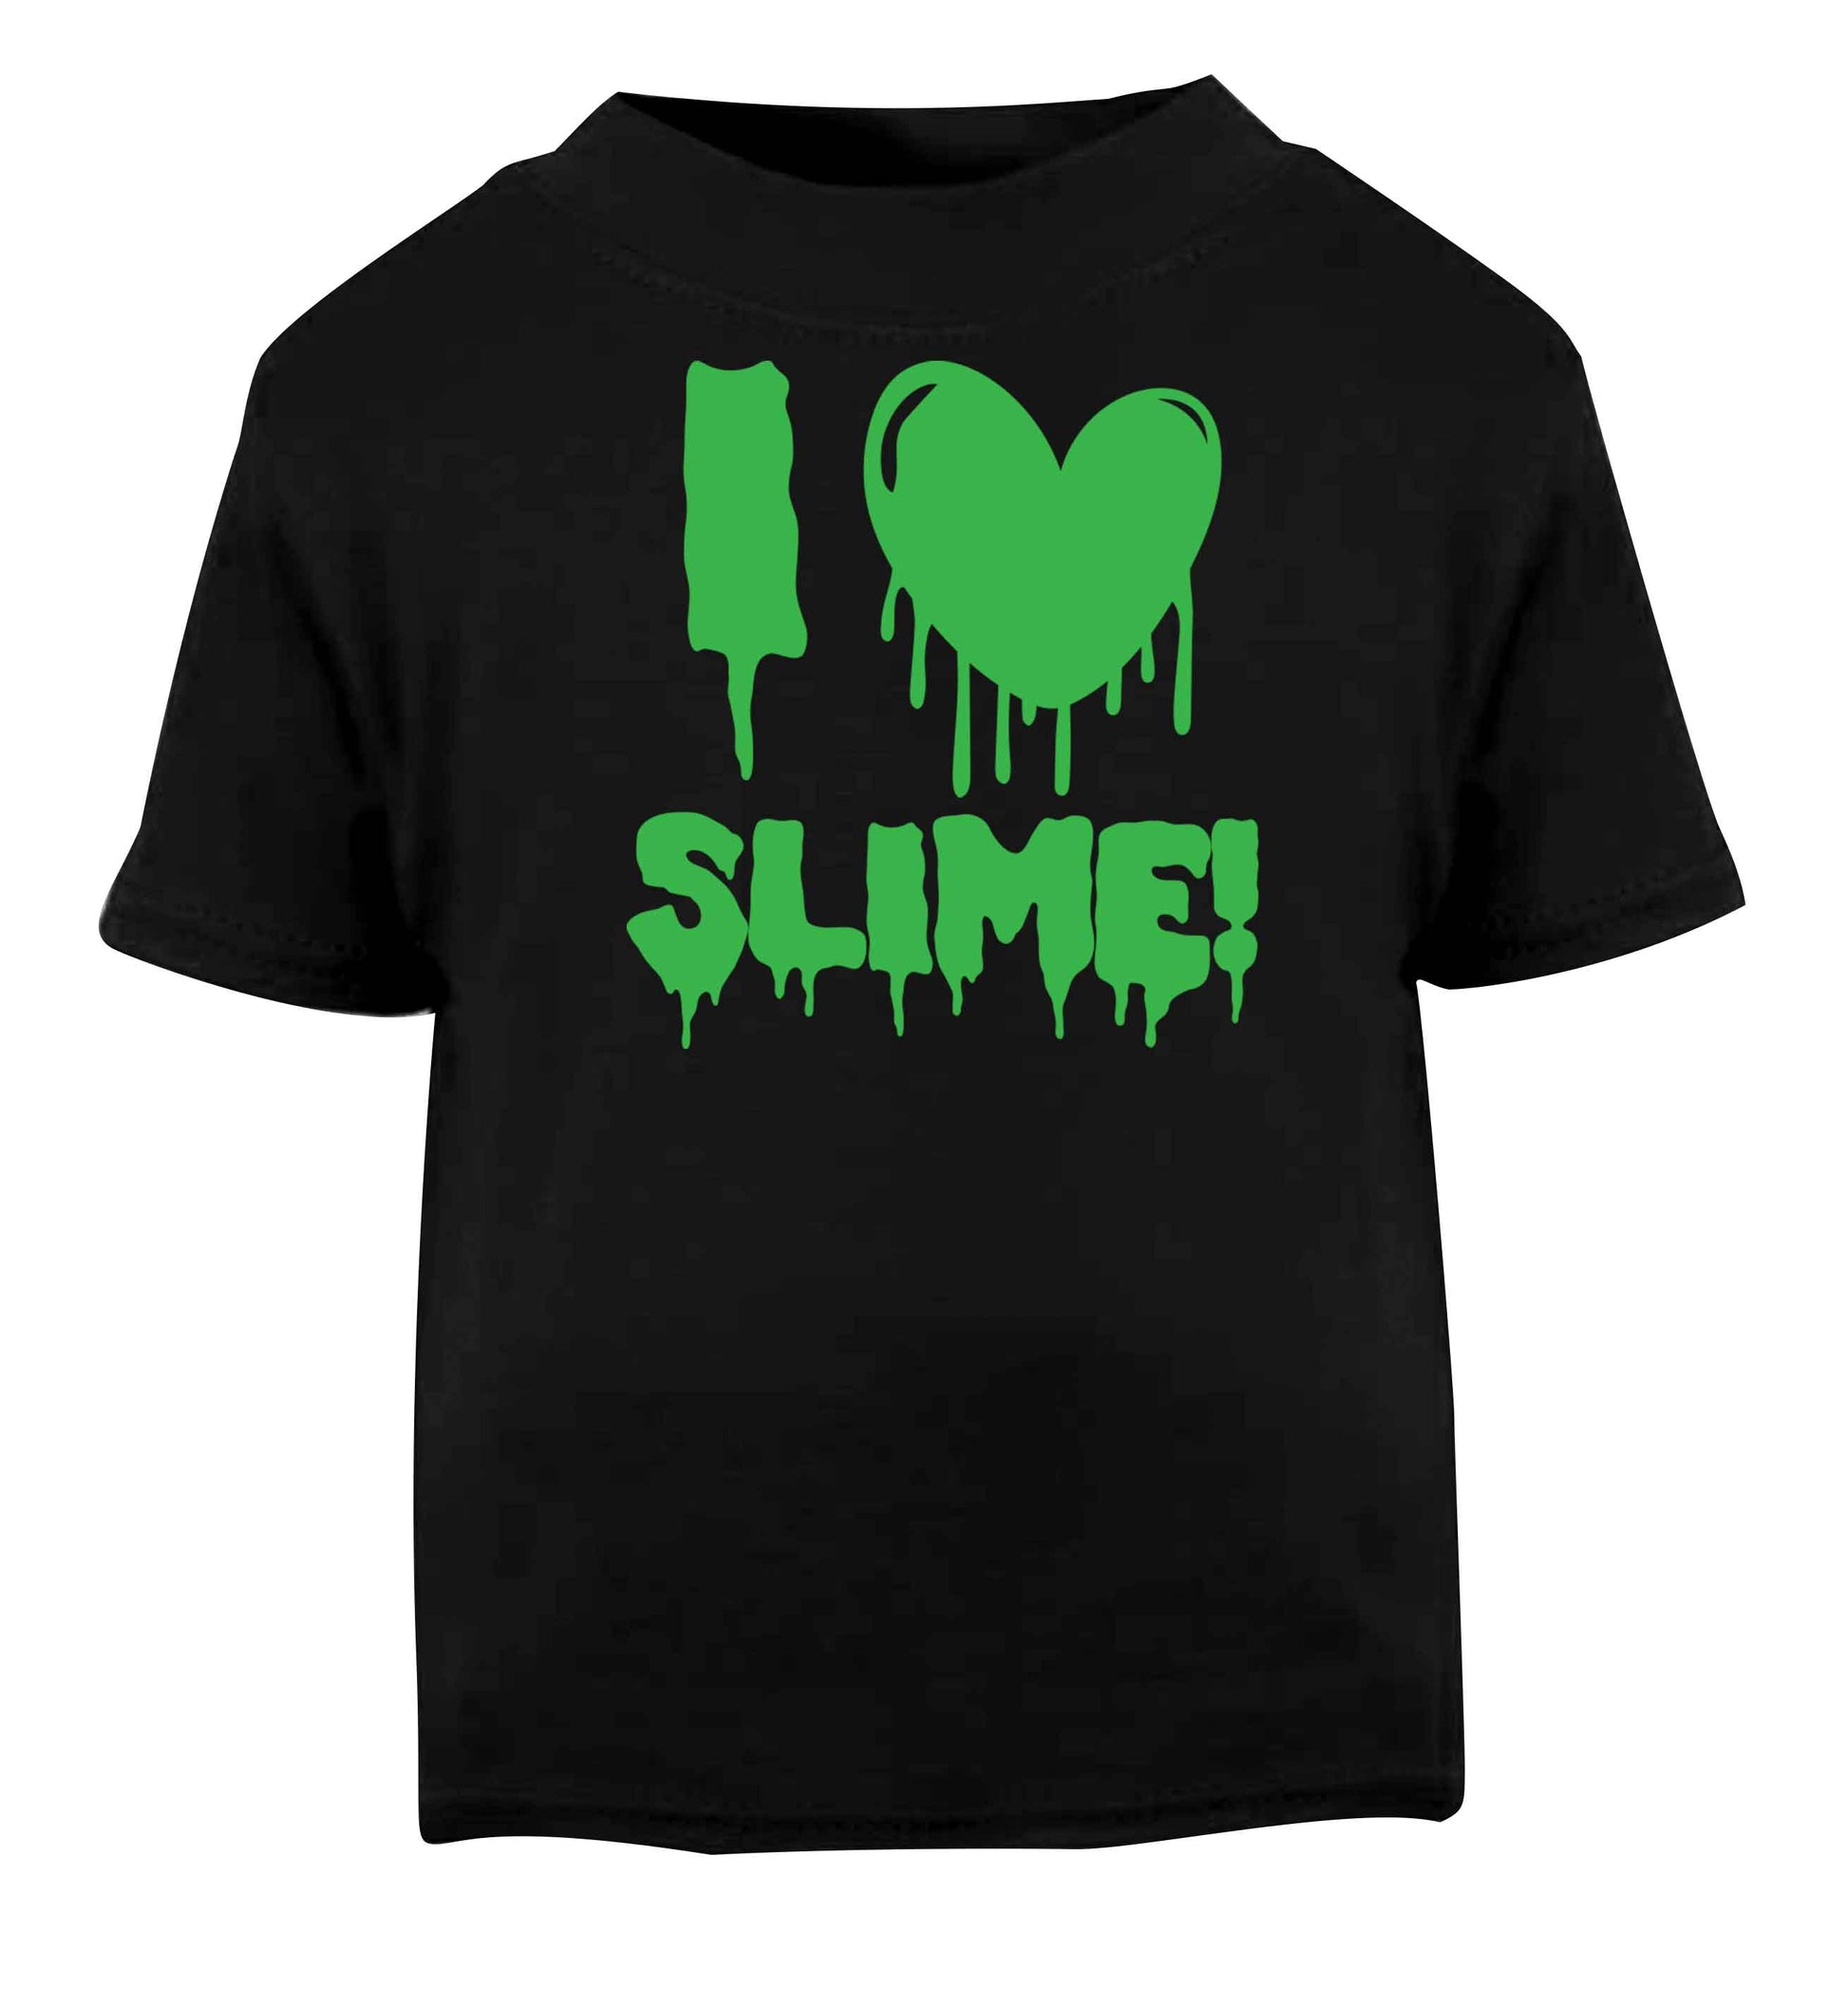 Neon green I love slime Black baby toddler Tshirt 2 years